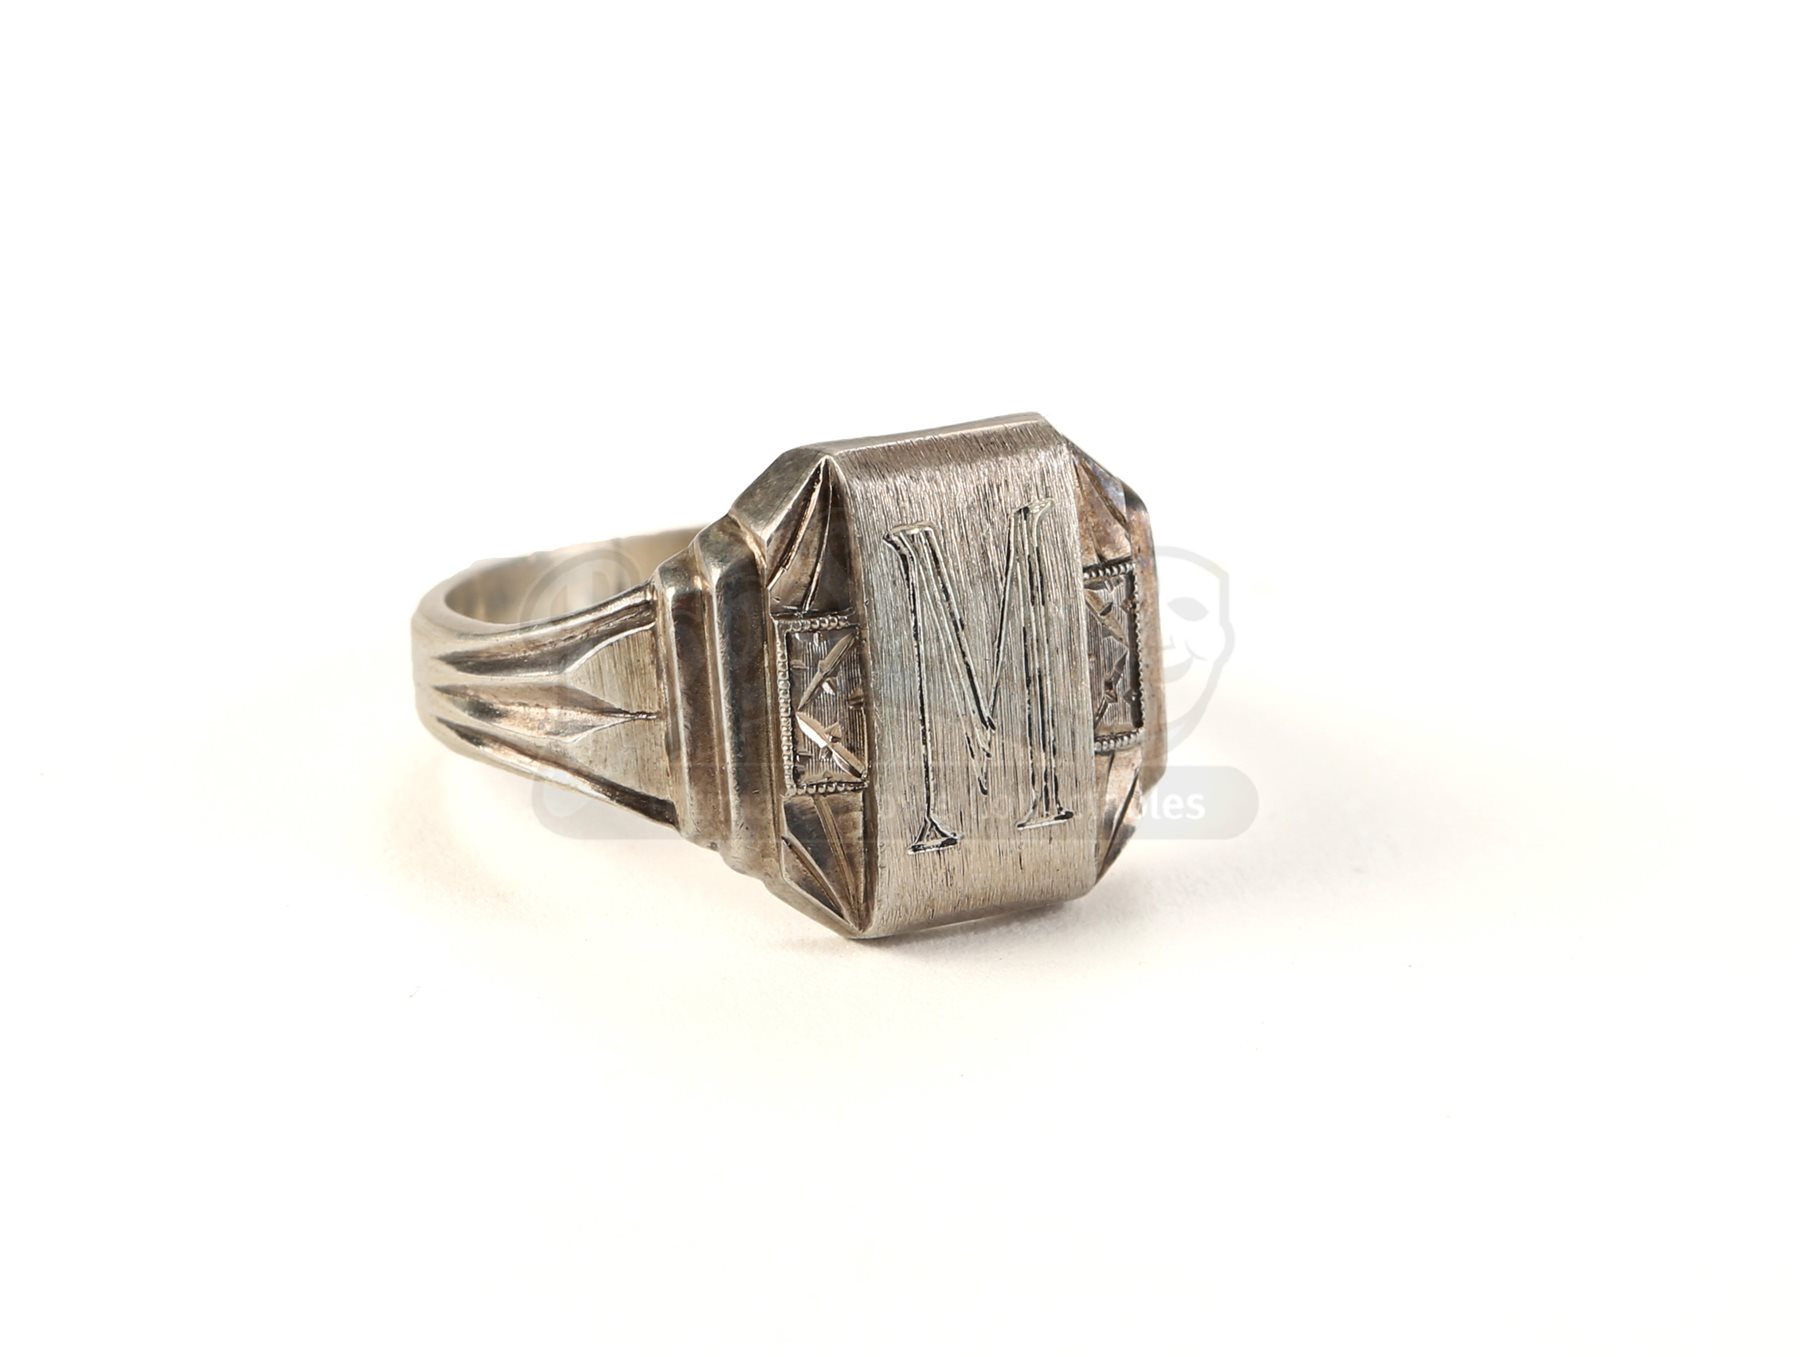 Edward Cullen’s Flashback Masen Ring - Current price: $750